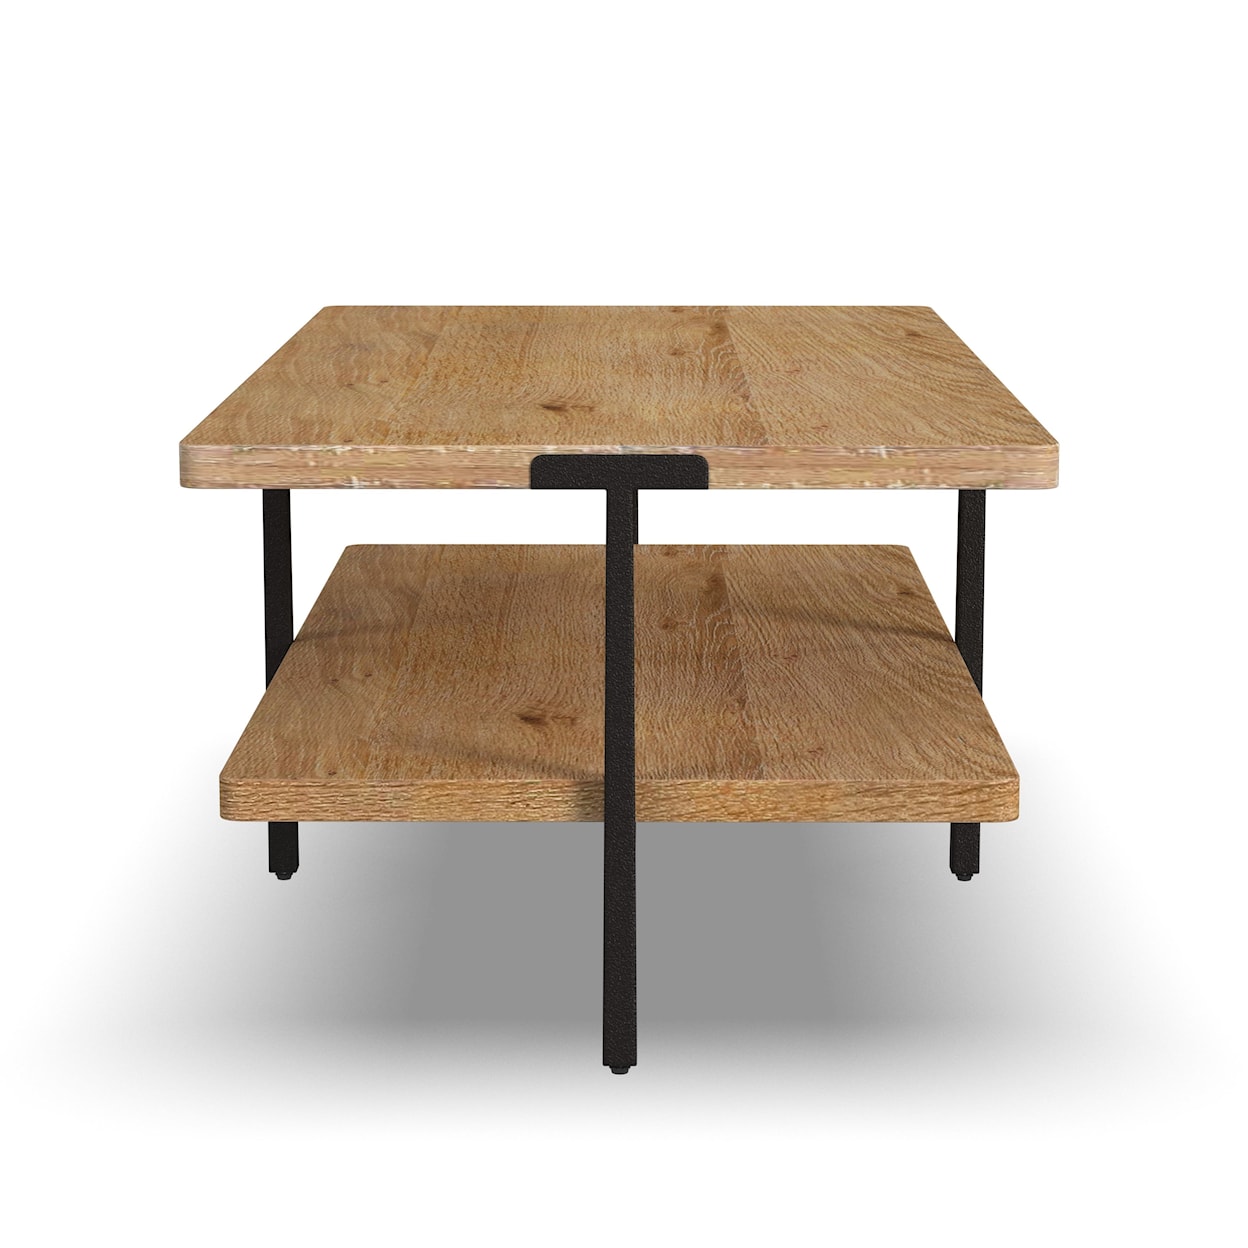 Flexsteel Casegoods Millwork Rectangular Coffee Table